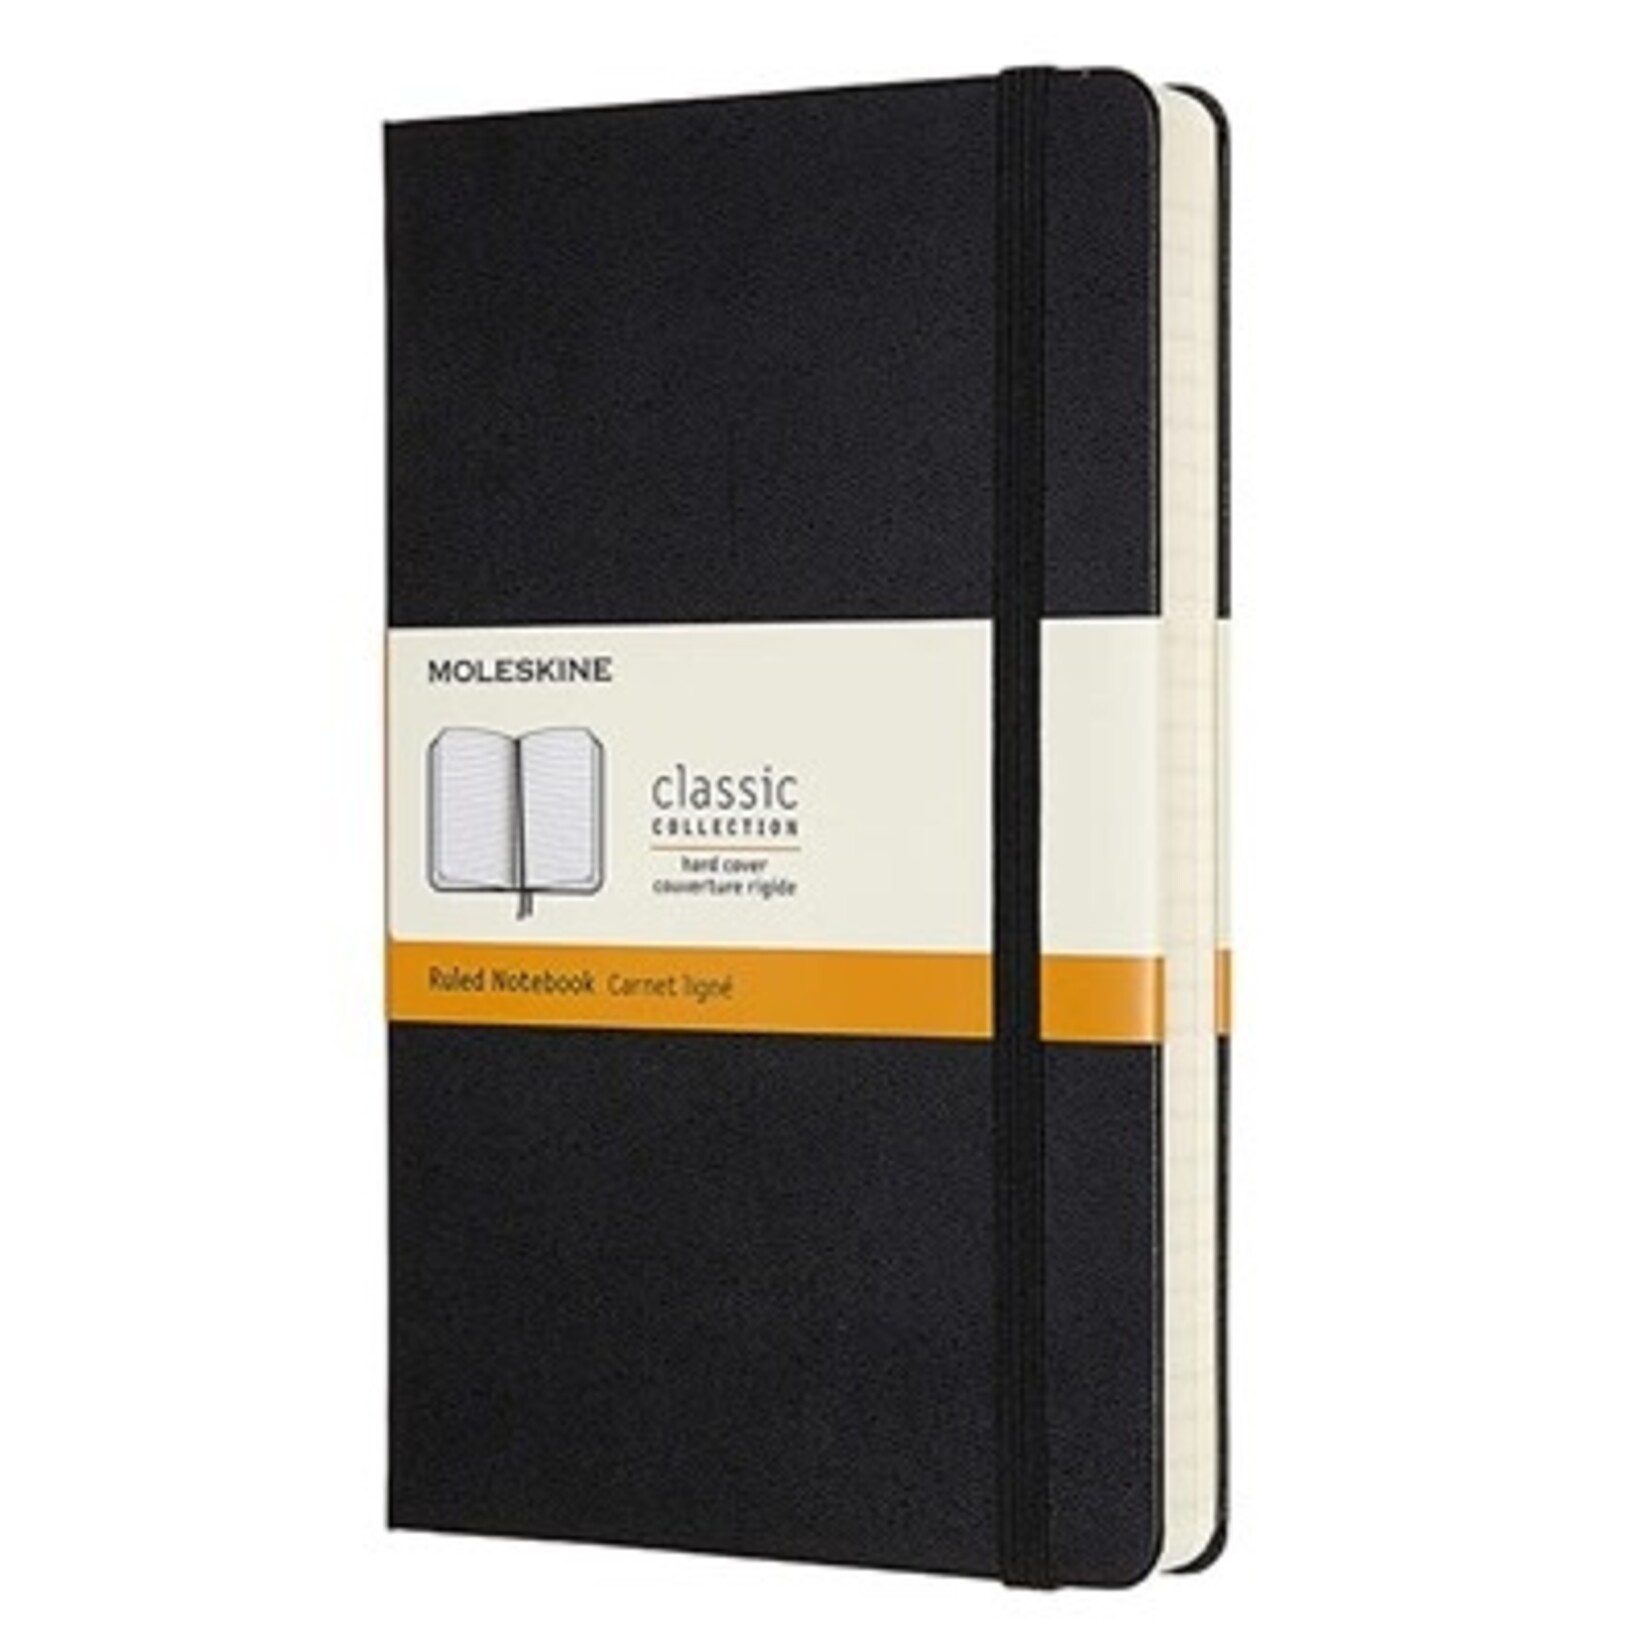 Moleskine Classic Notebook, Large, Ruled, Black, Hard Cover